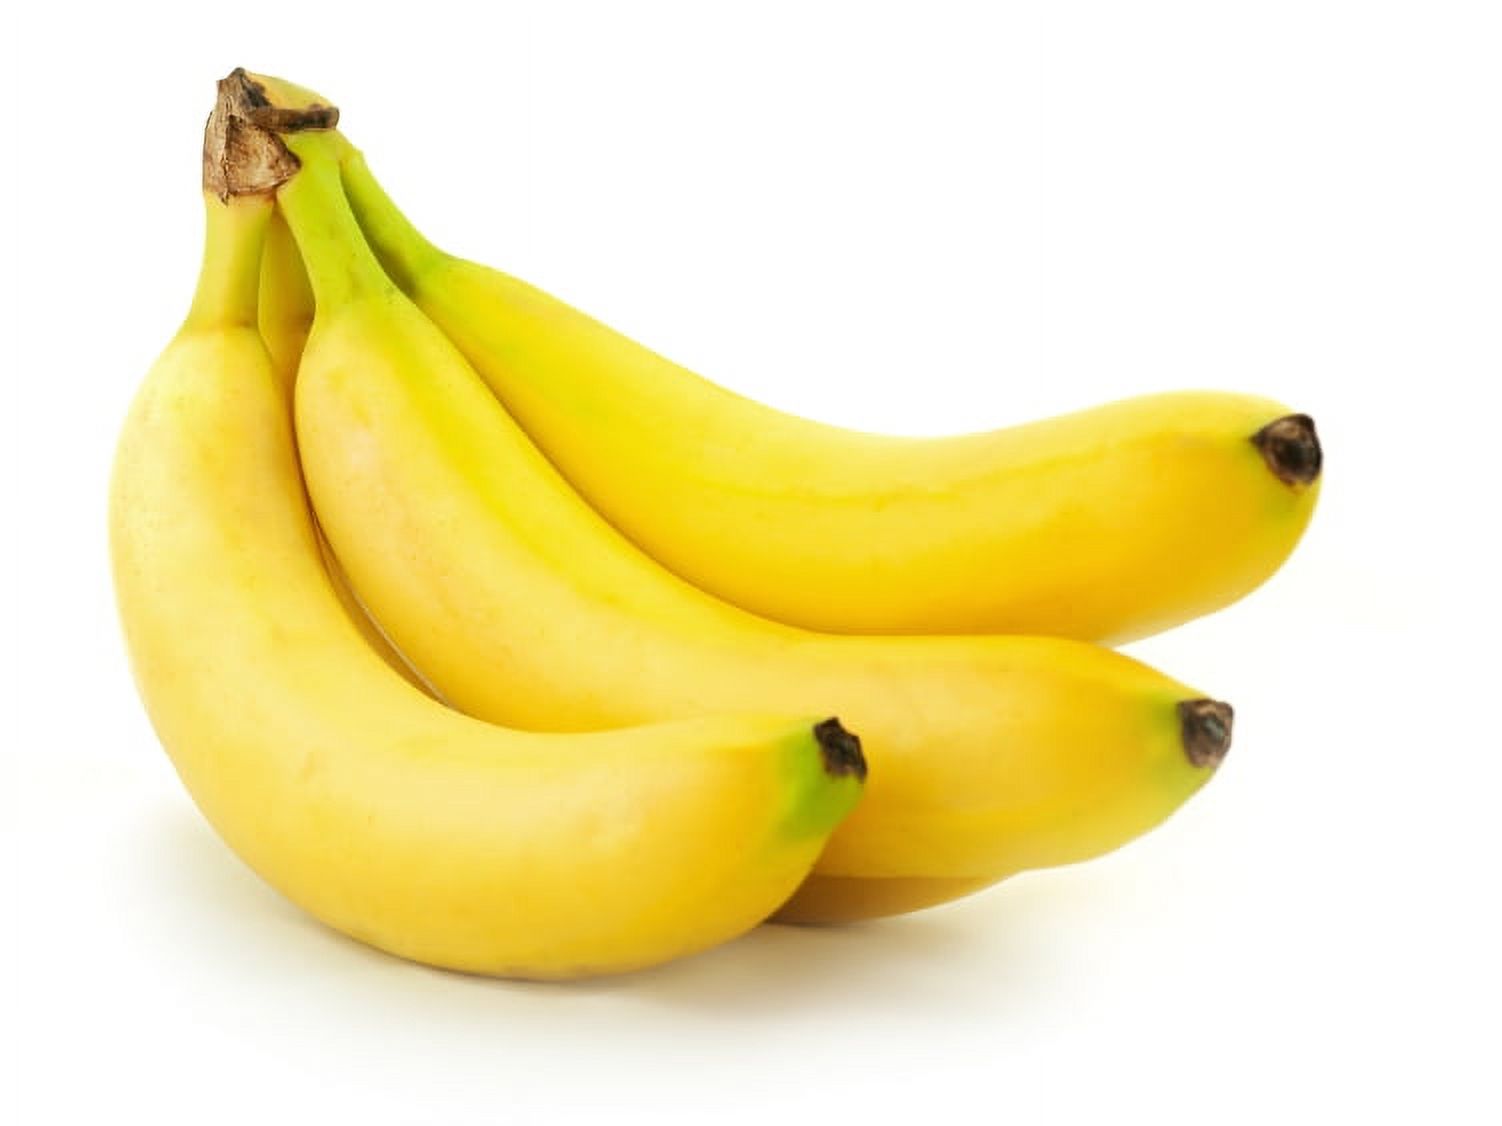 Marketside Fresh Organic Bananas, Bunch - image 5 of 7